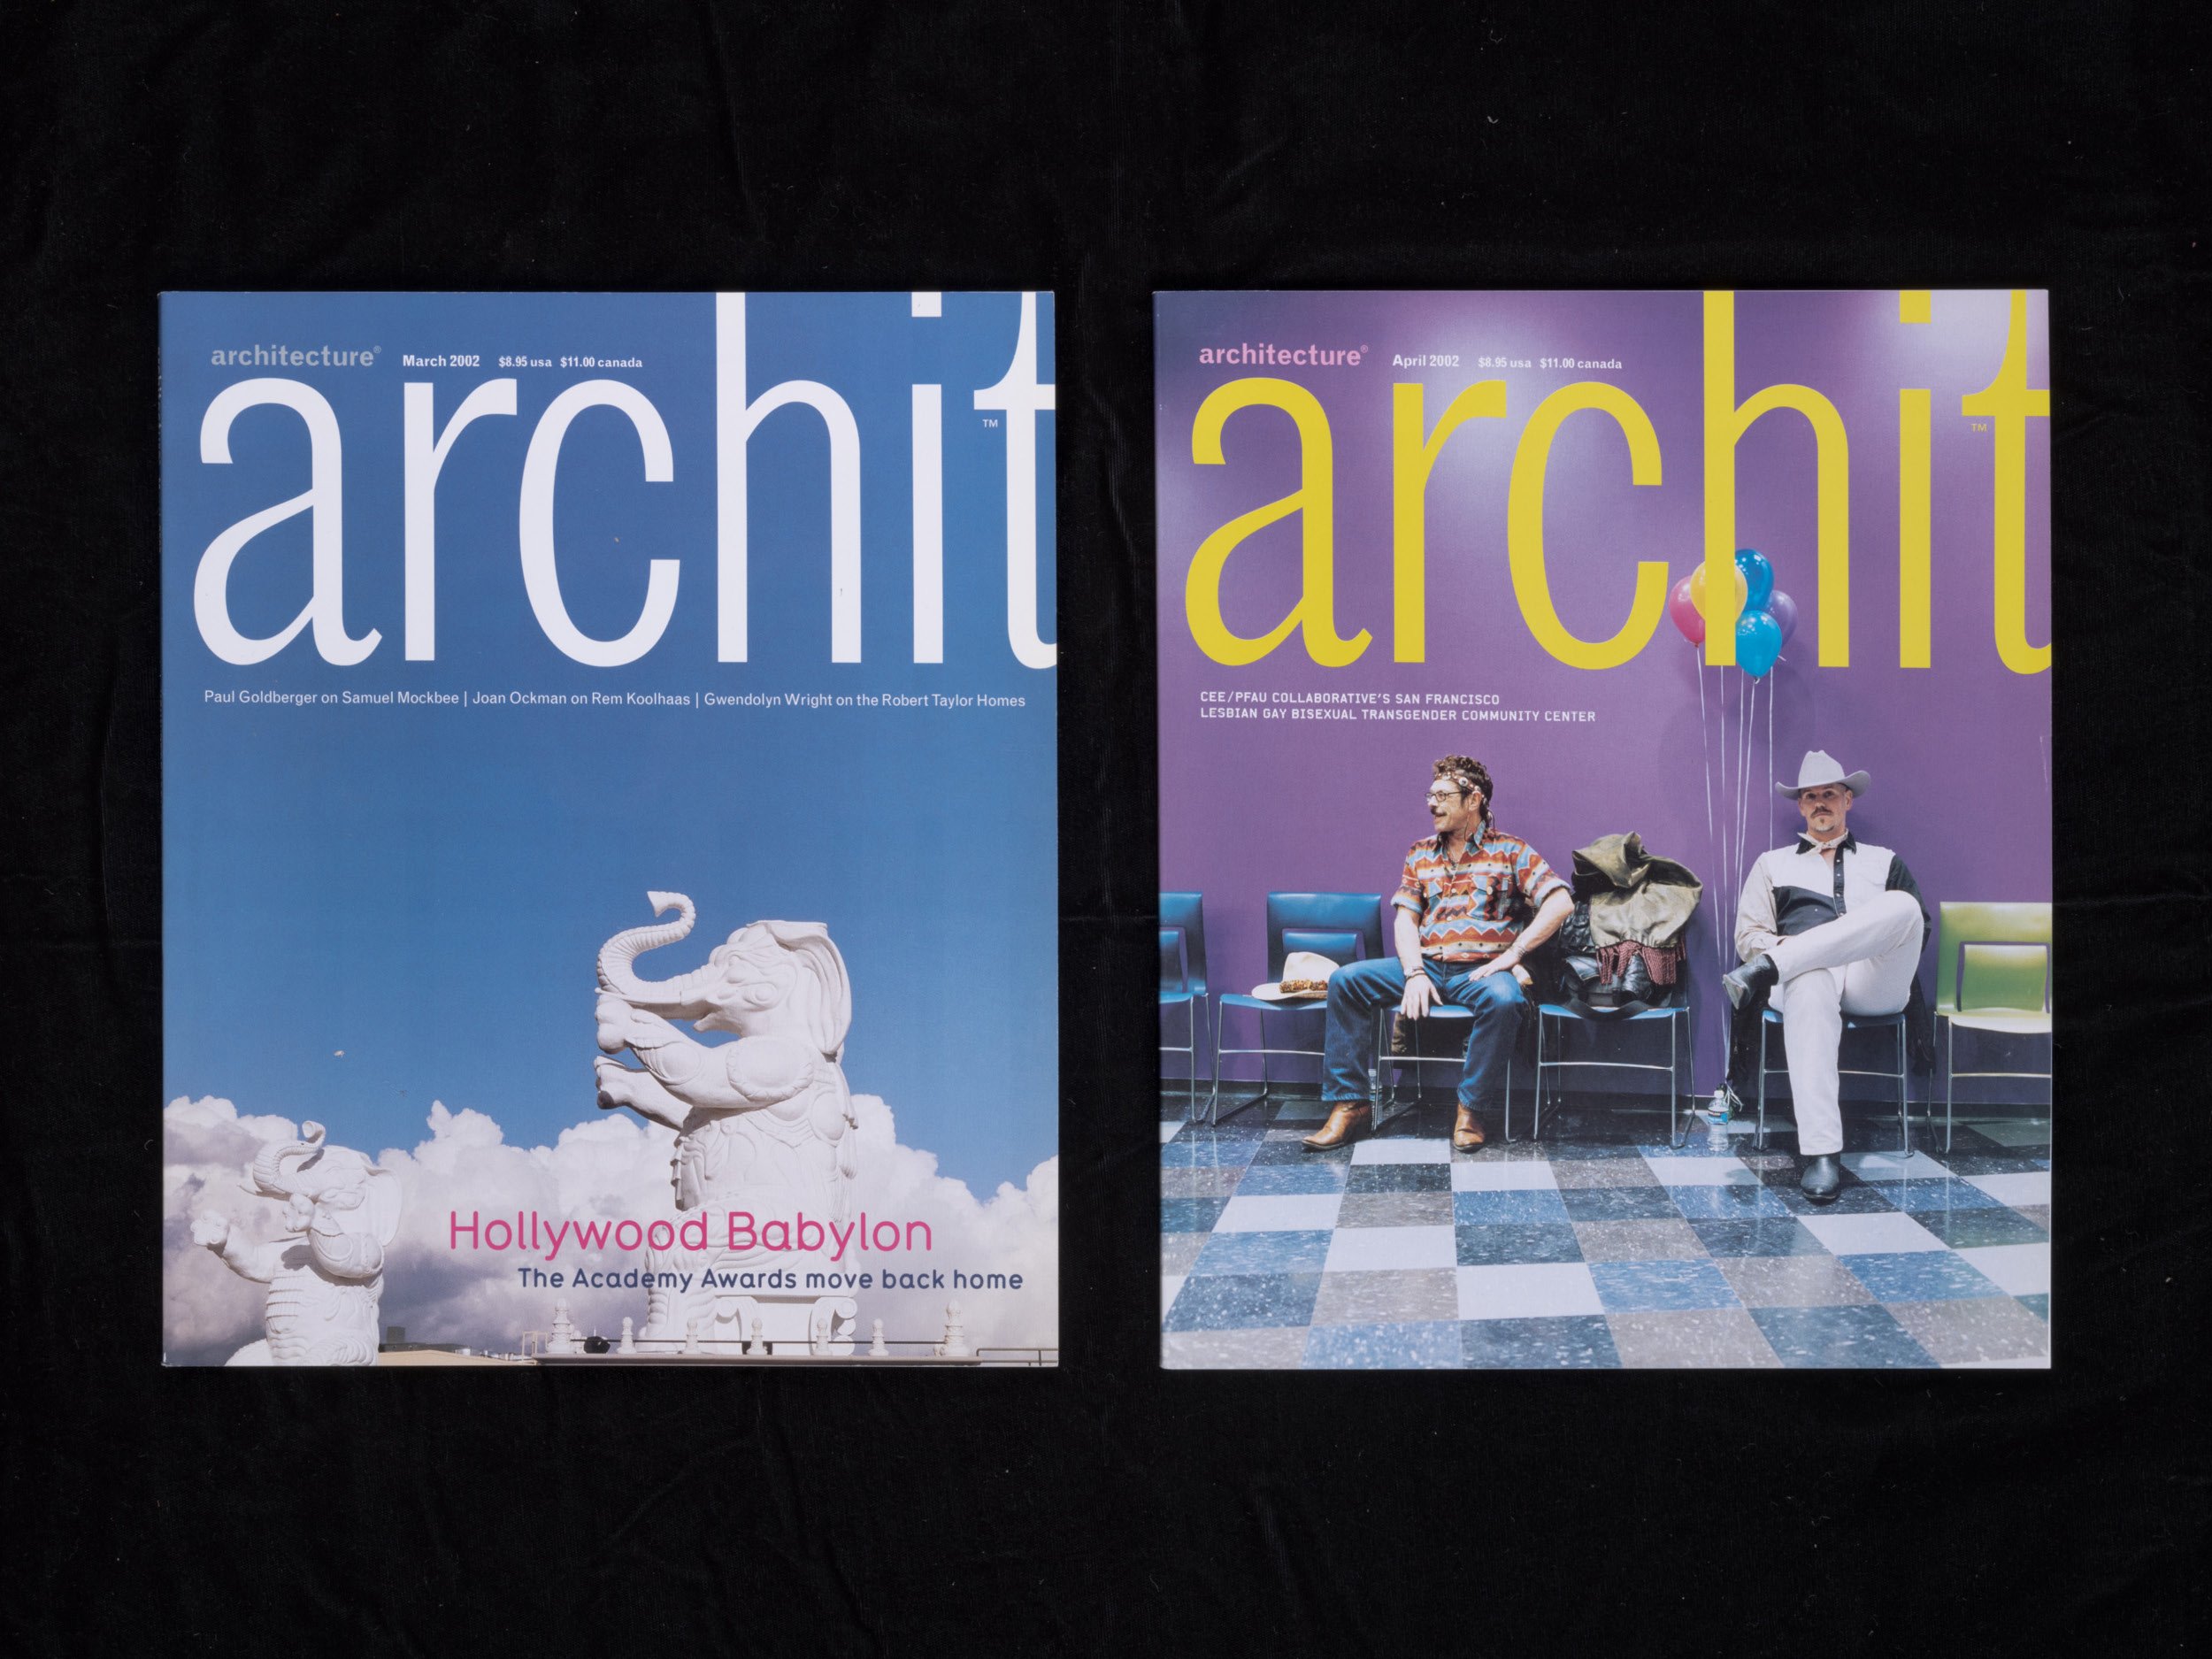 Perrin-Arch-Covers-05.jpg